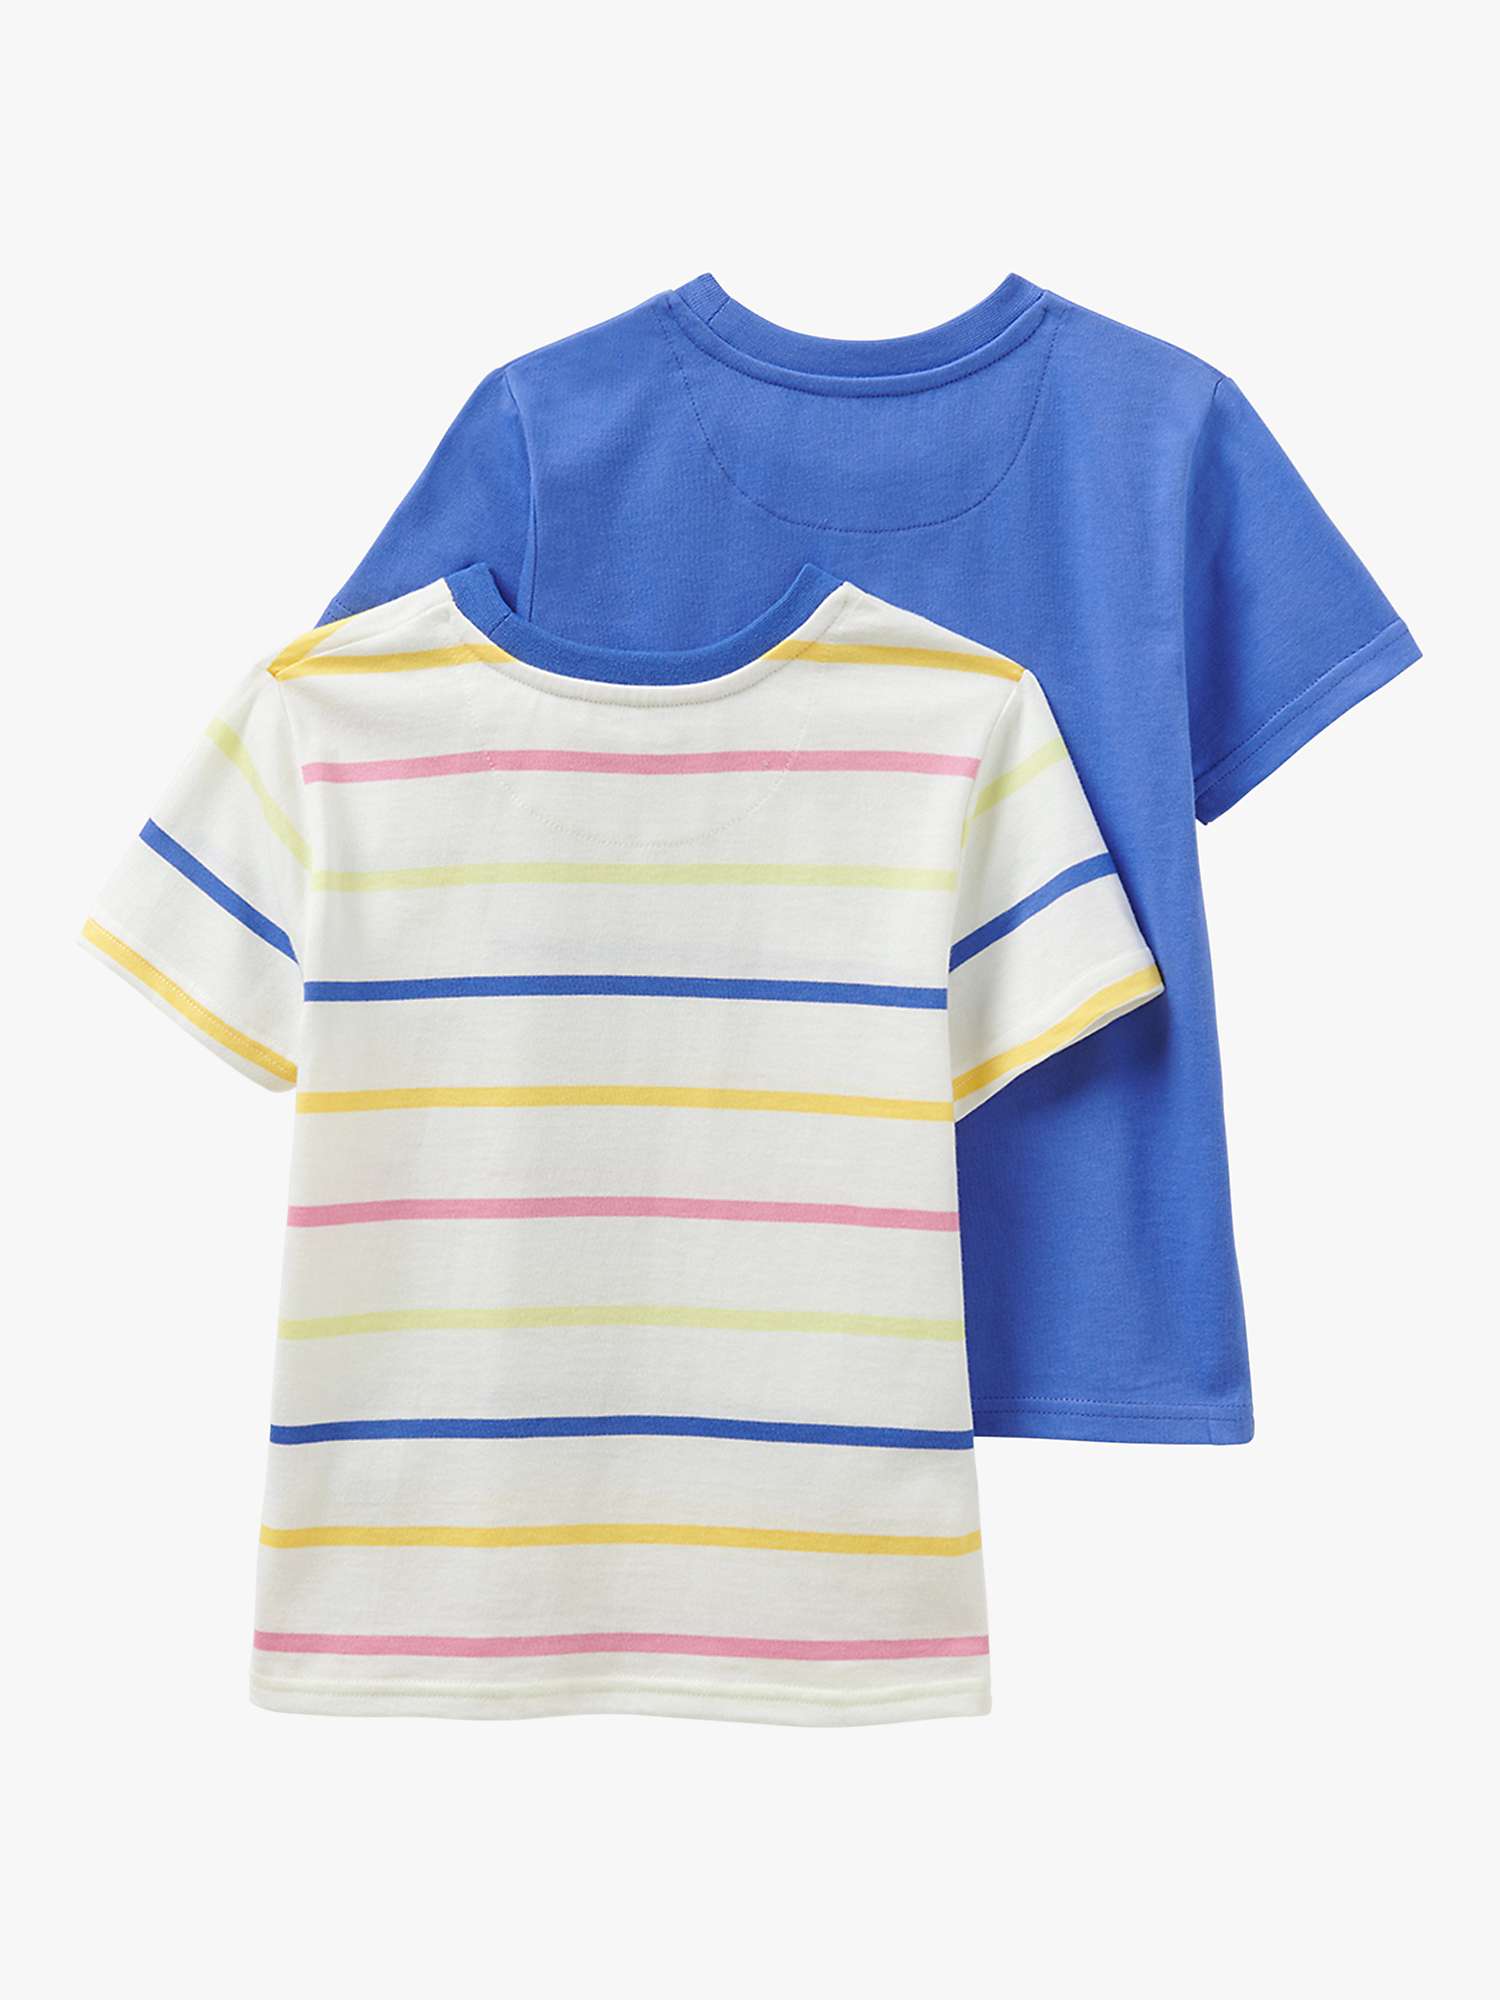 Buy Crew Clothing Kids' Plain/Stripe Short Sleeve T-Shirts, Pack Of 2, Blue/Multi Online at johnlewis.com